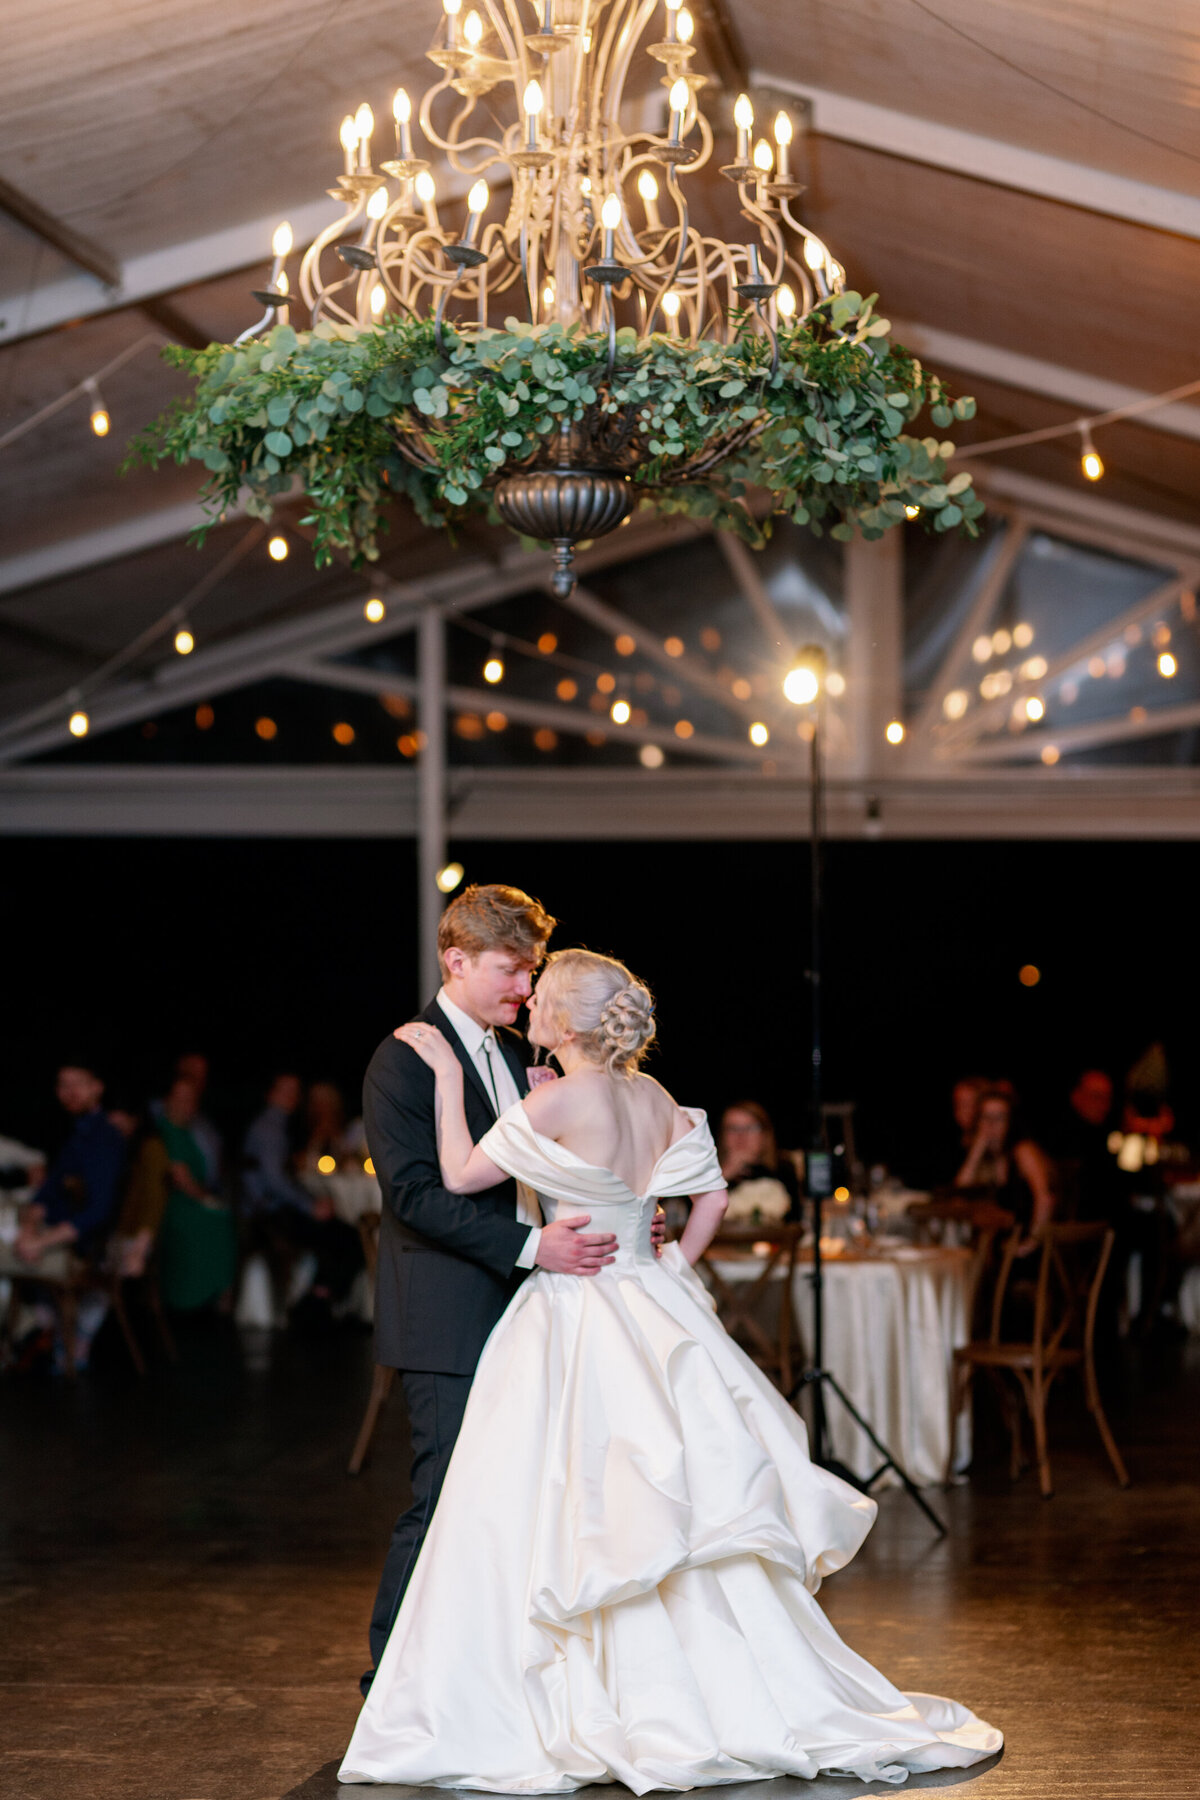 Hannah & Harrison - Dara's Garden - East Tennessee Wedding Photographer - Alaina René Photography-202